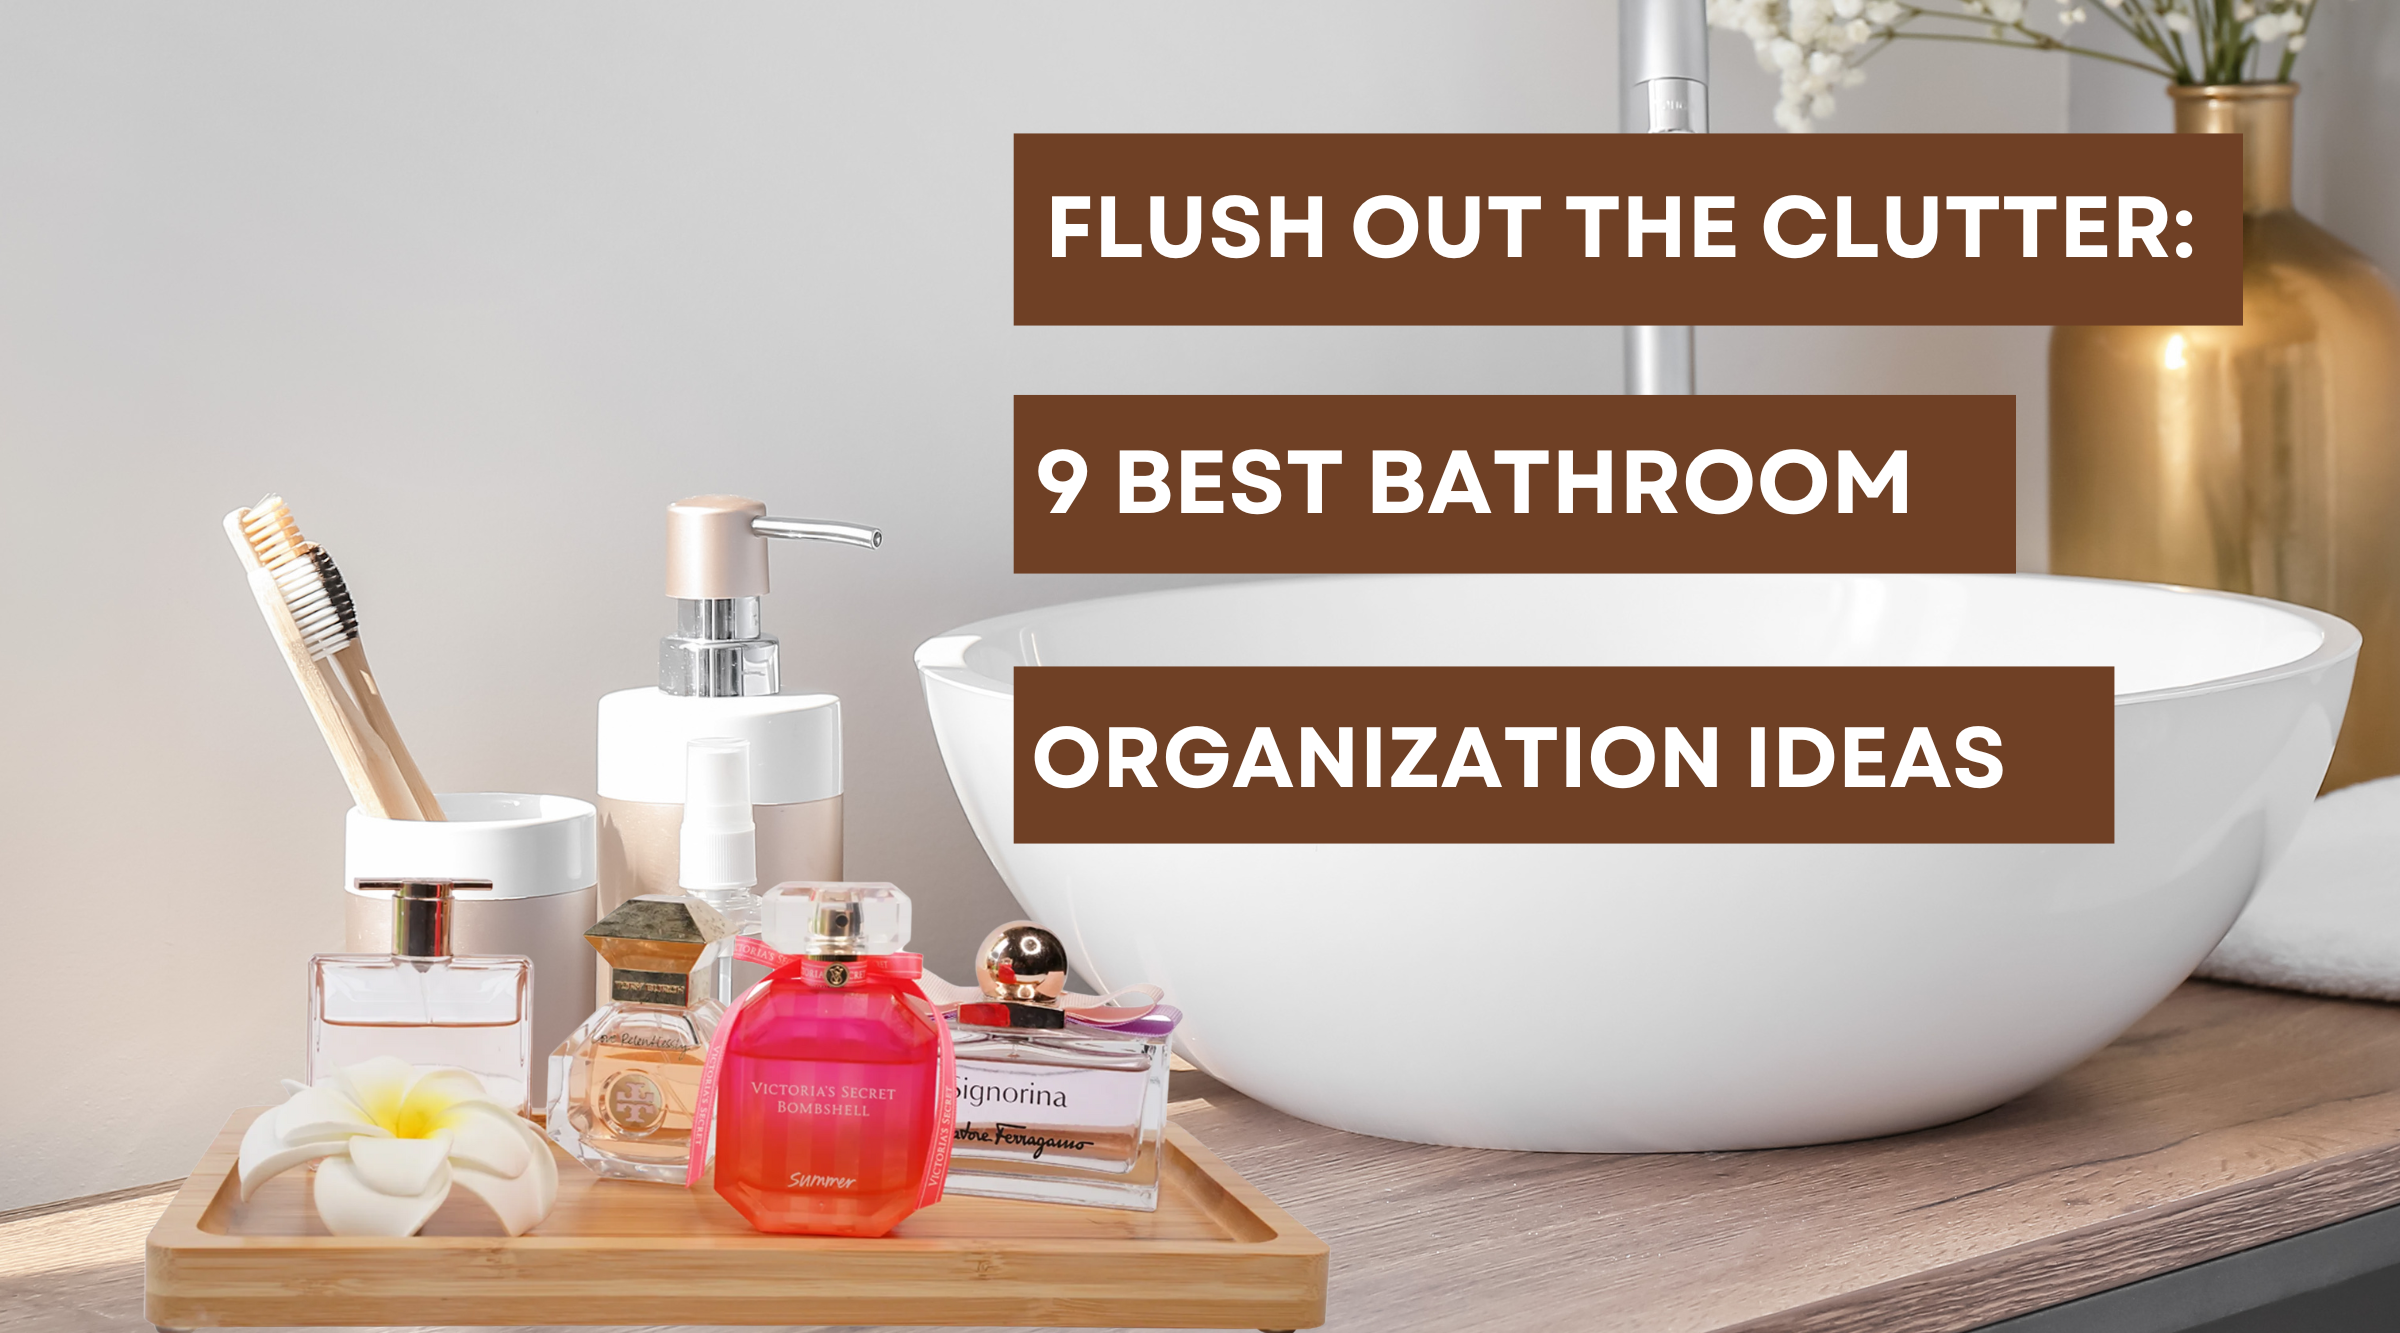 6 Must-Have Guest Bathroom Essentials - Organized-ish